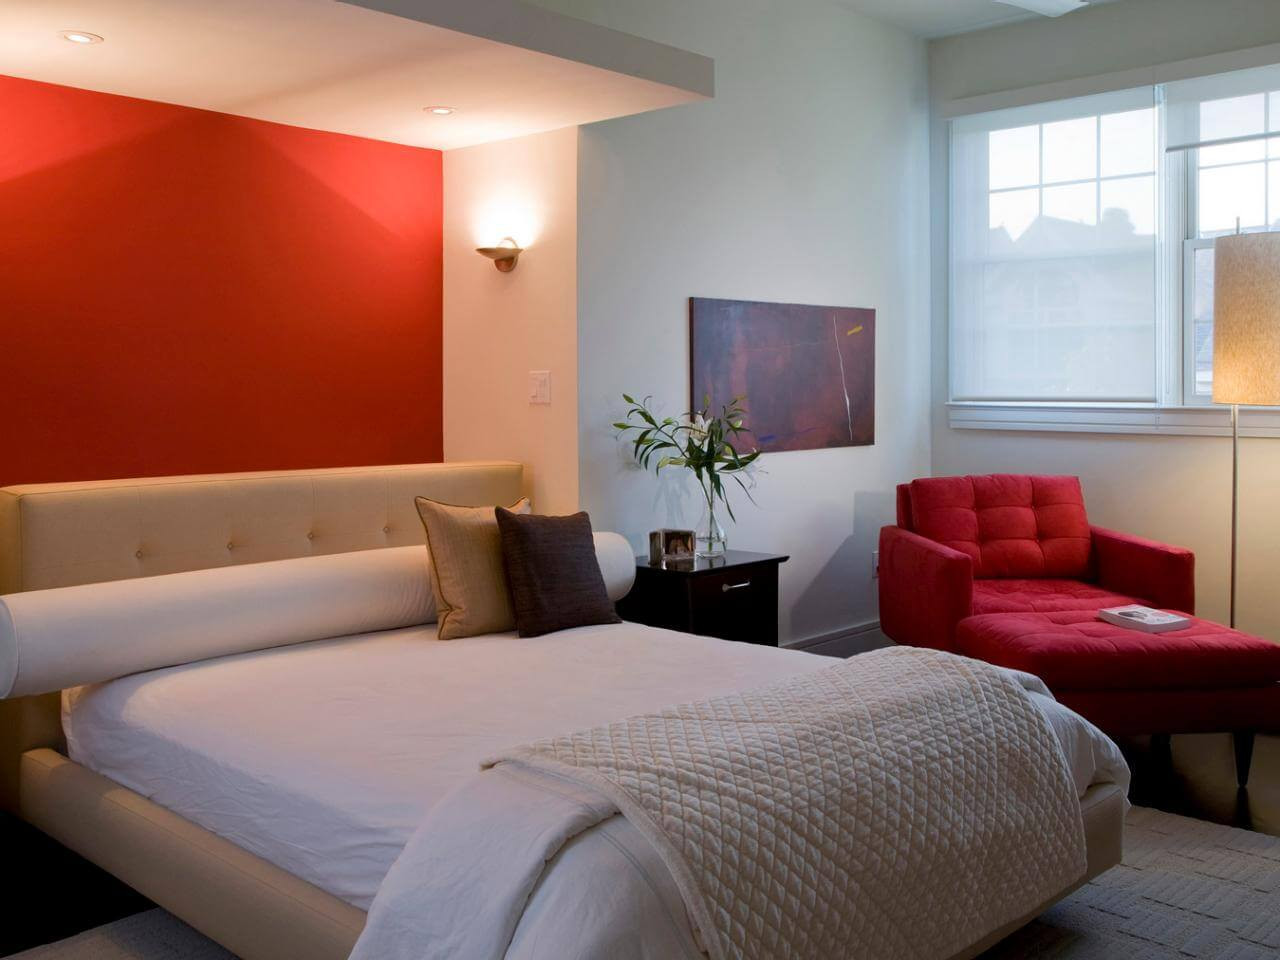 Popular Bedroom Colors
 20 Best Color Ideas for Bedrooms 2018 Interior